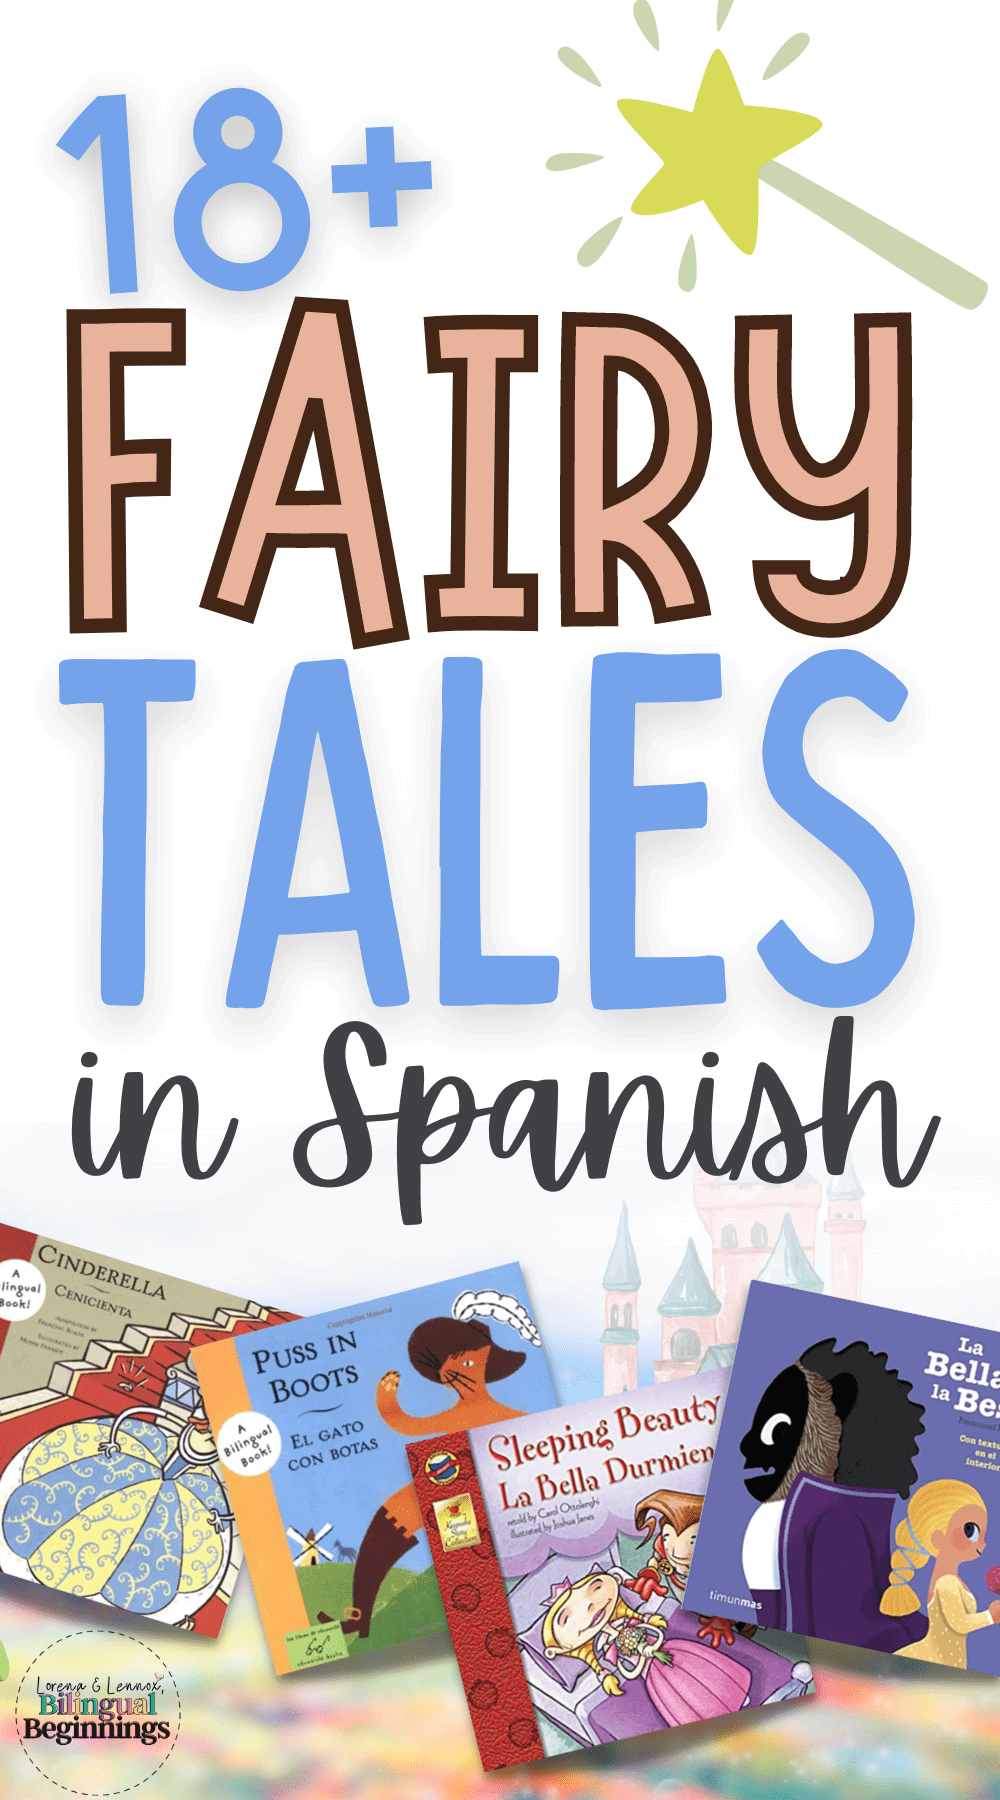 18+ Fairy Tales in Spanish